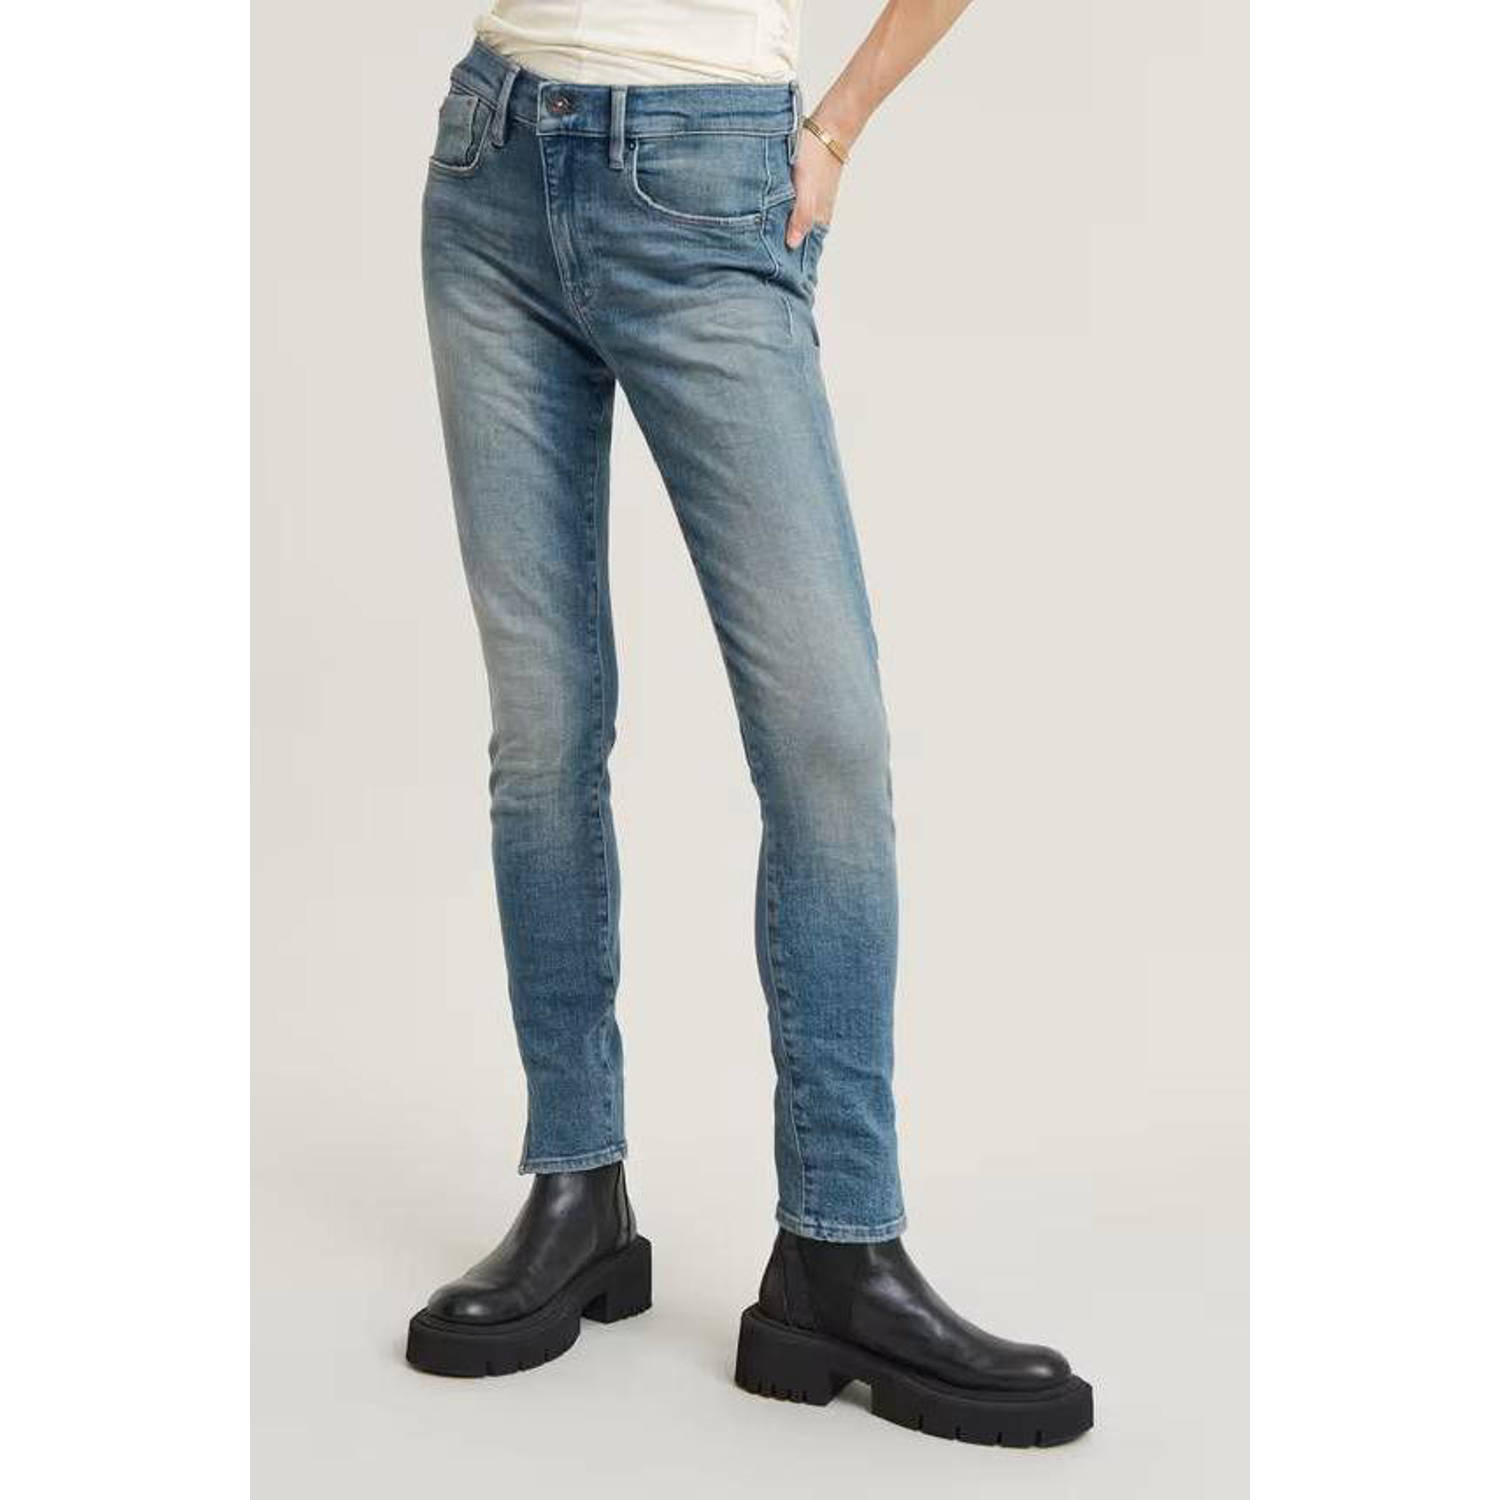 G-Star RAW Lhana high waist skinny jeans met split medium blue denim